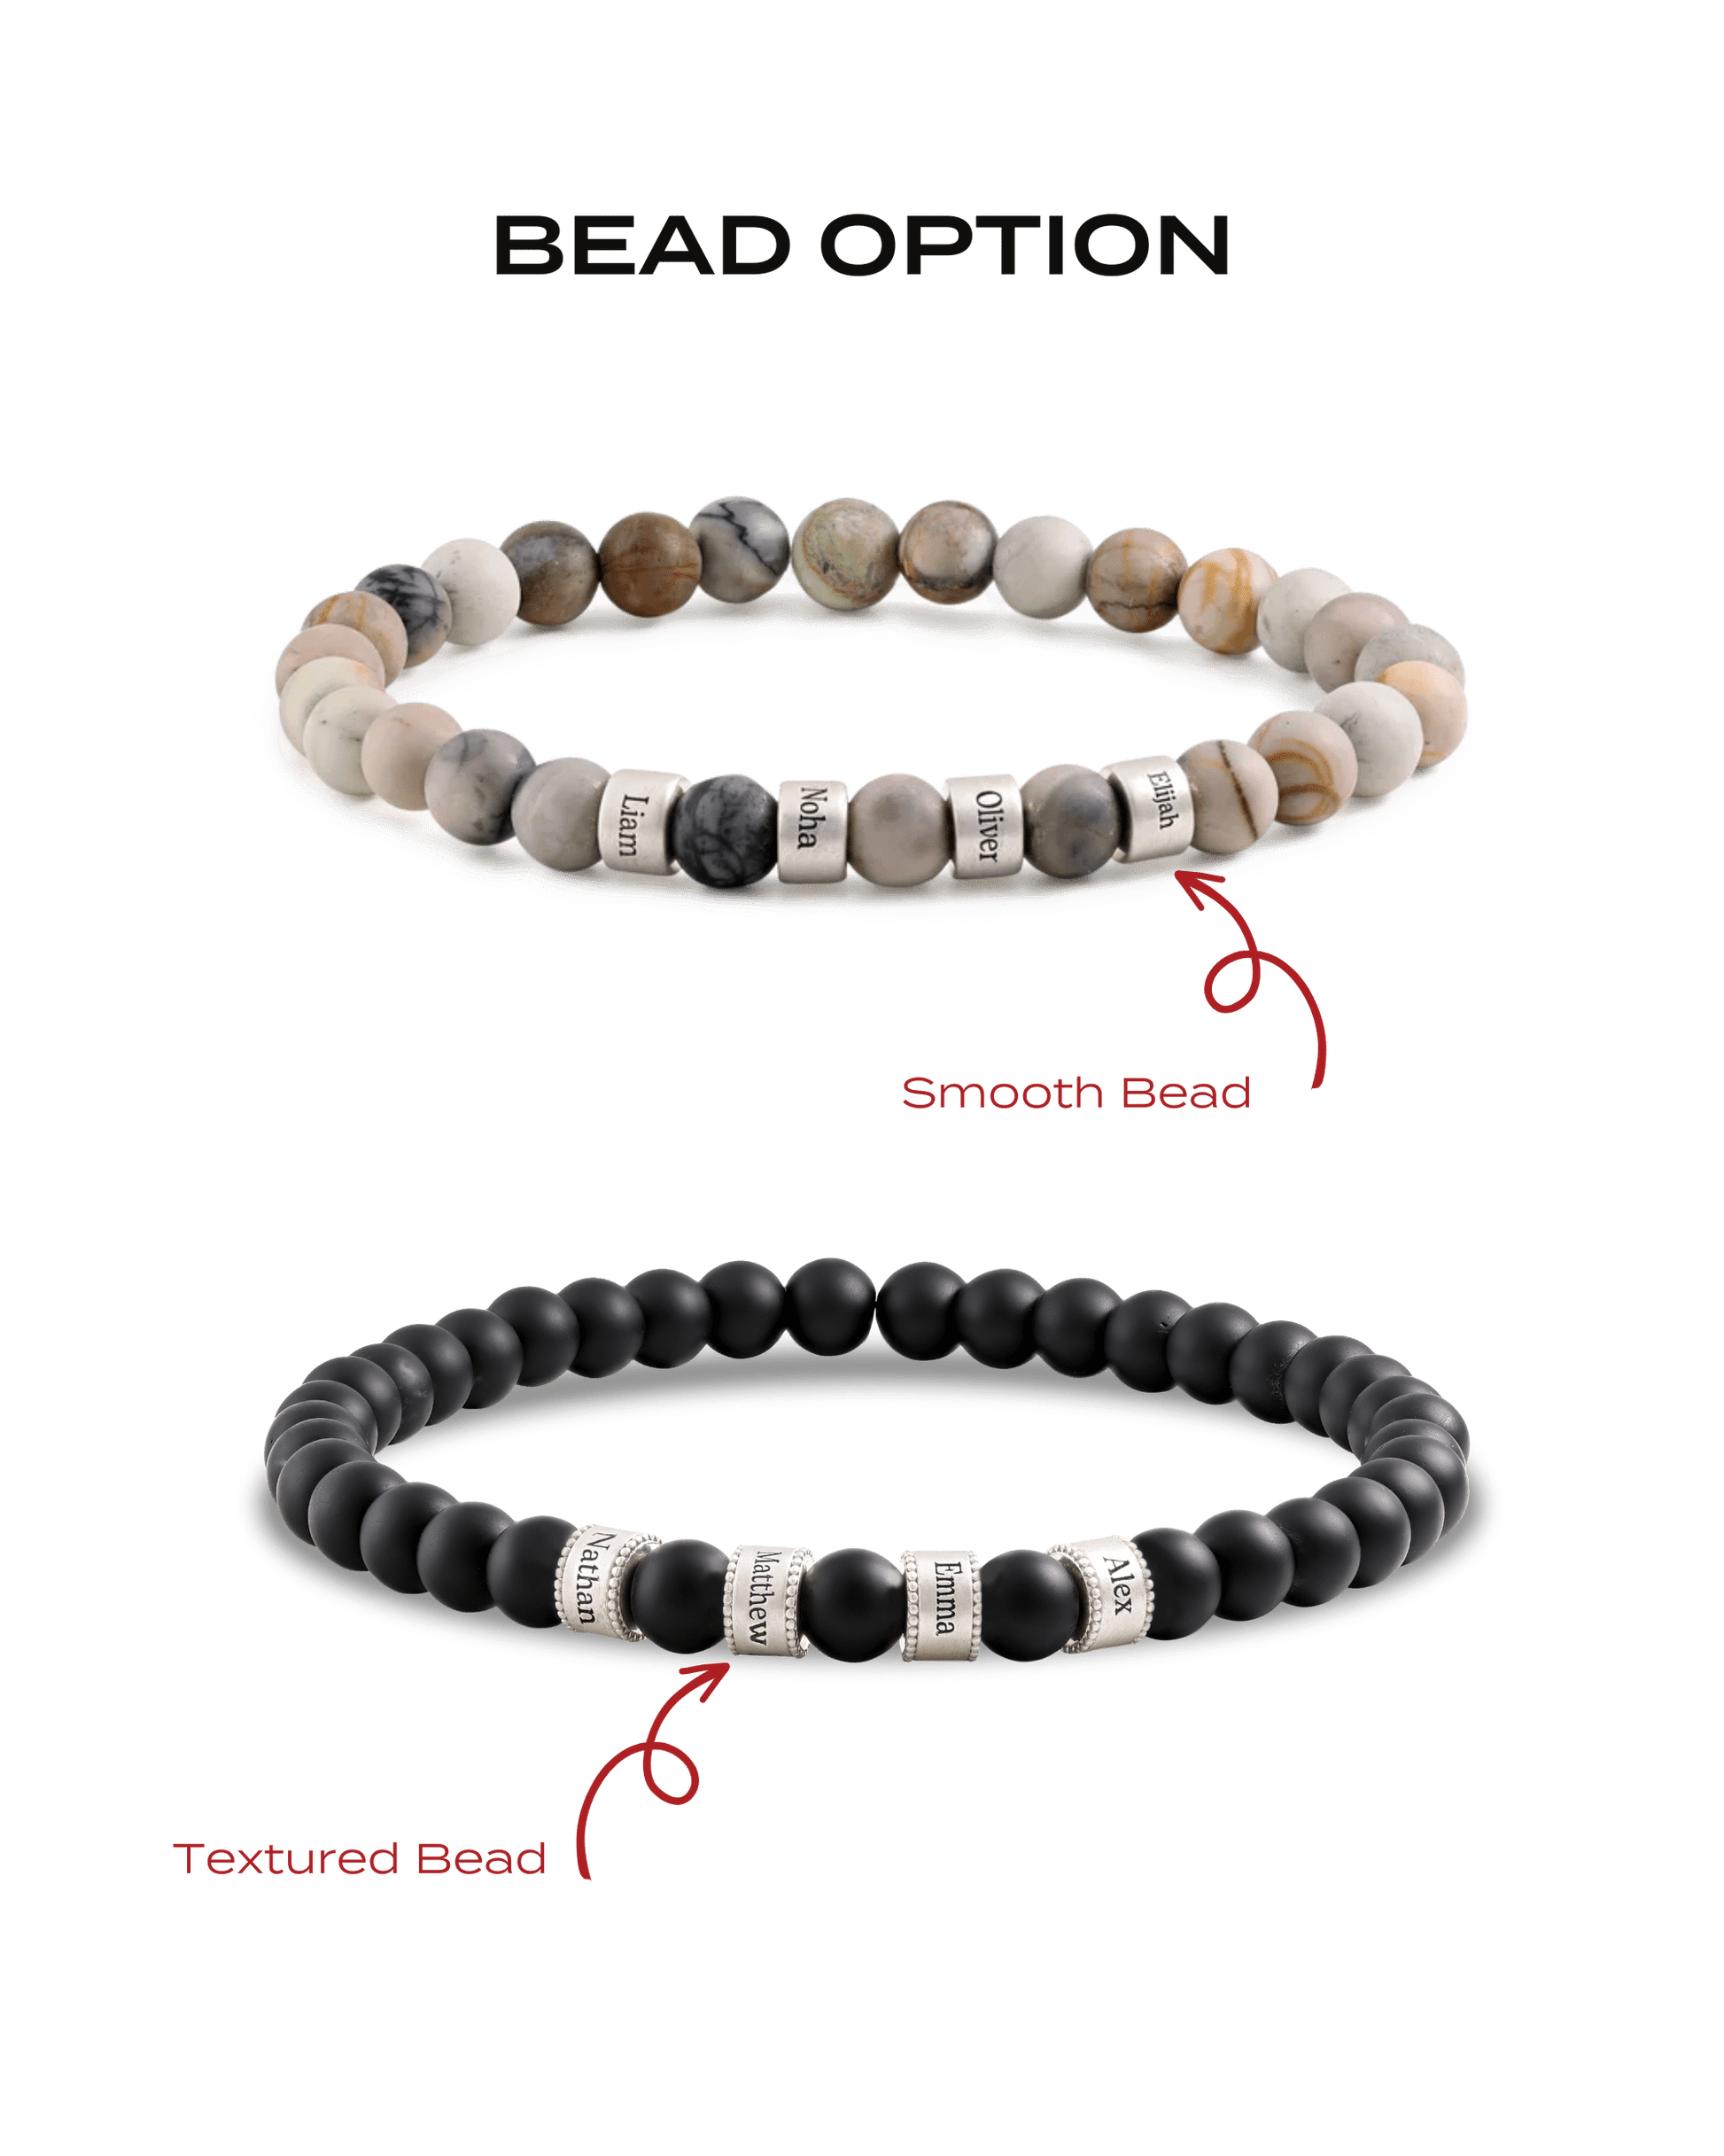 Dad's Legacy Beads Bracelet w/ Turquoise Stones - 925 Sterling Silver Bracelets magal-dev 